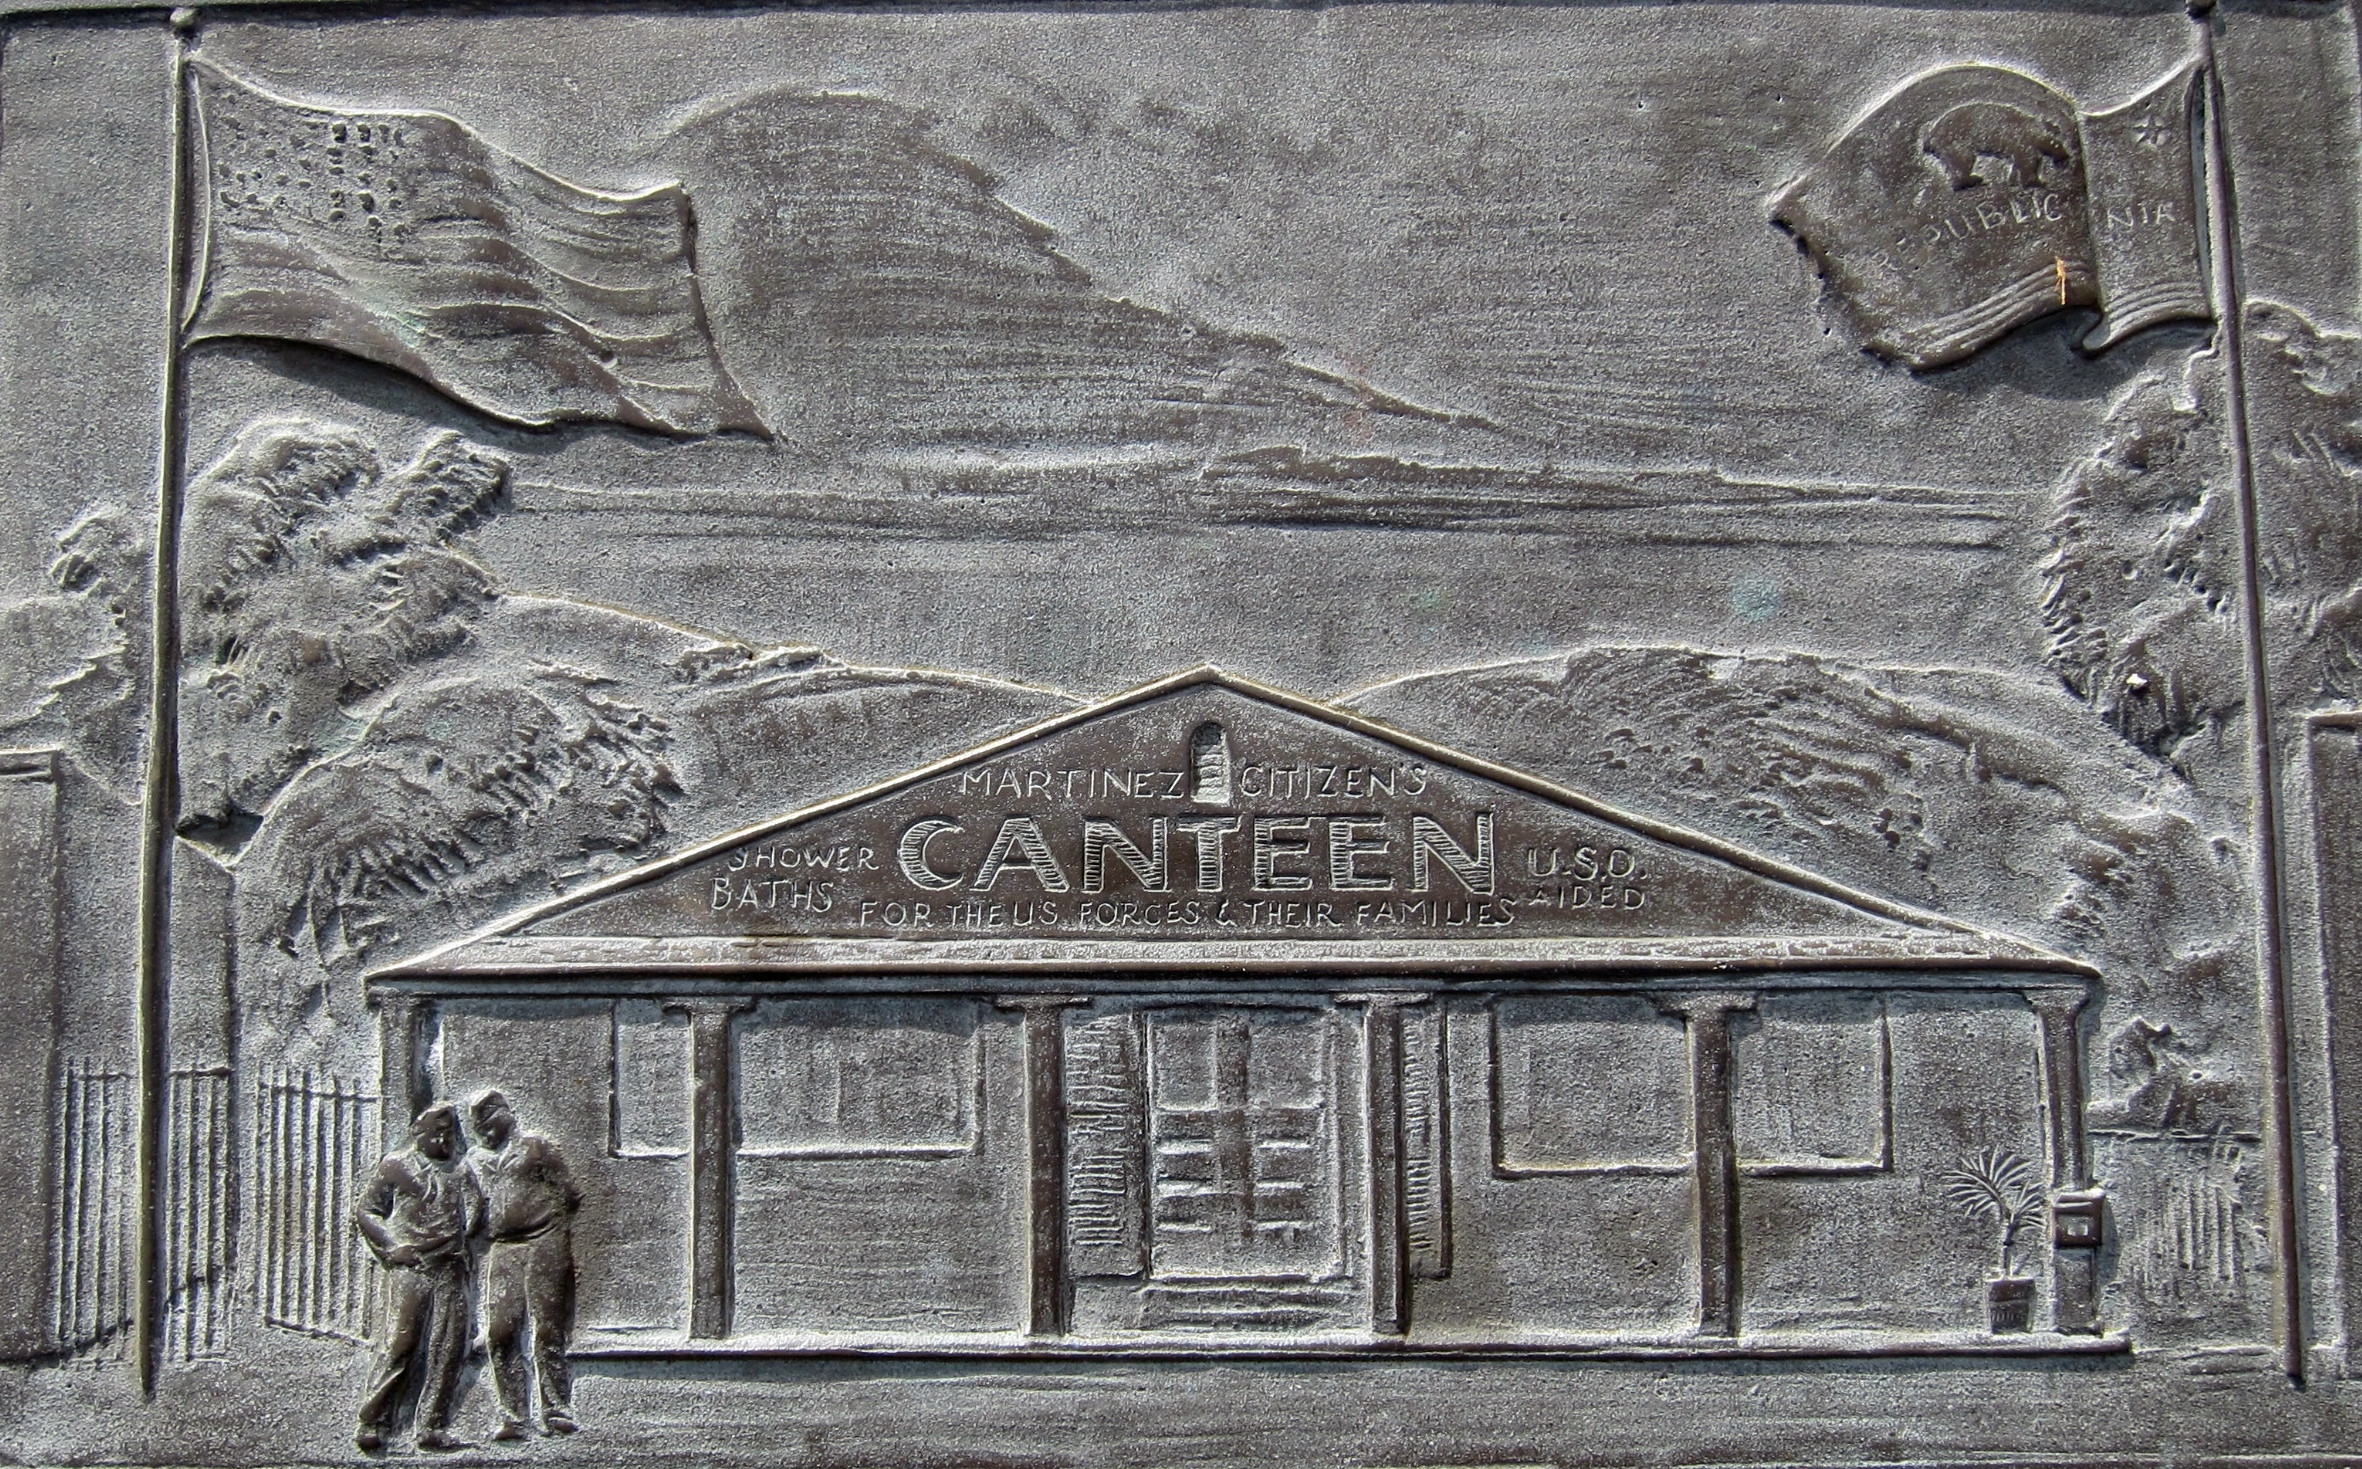 Martinez Troops-In-Transit Canteen - artwork on marker